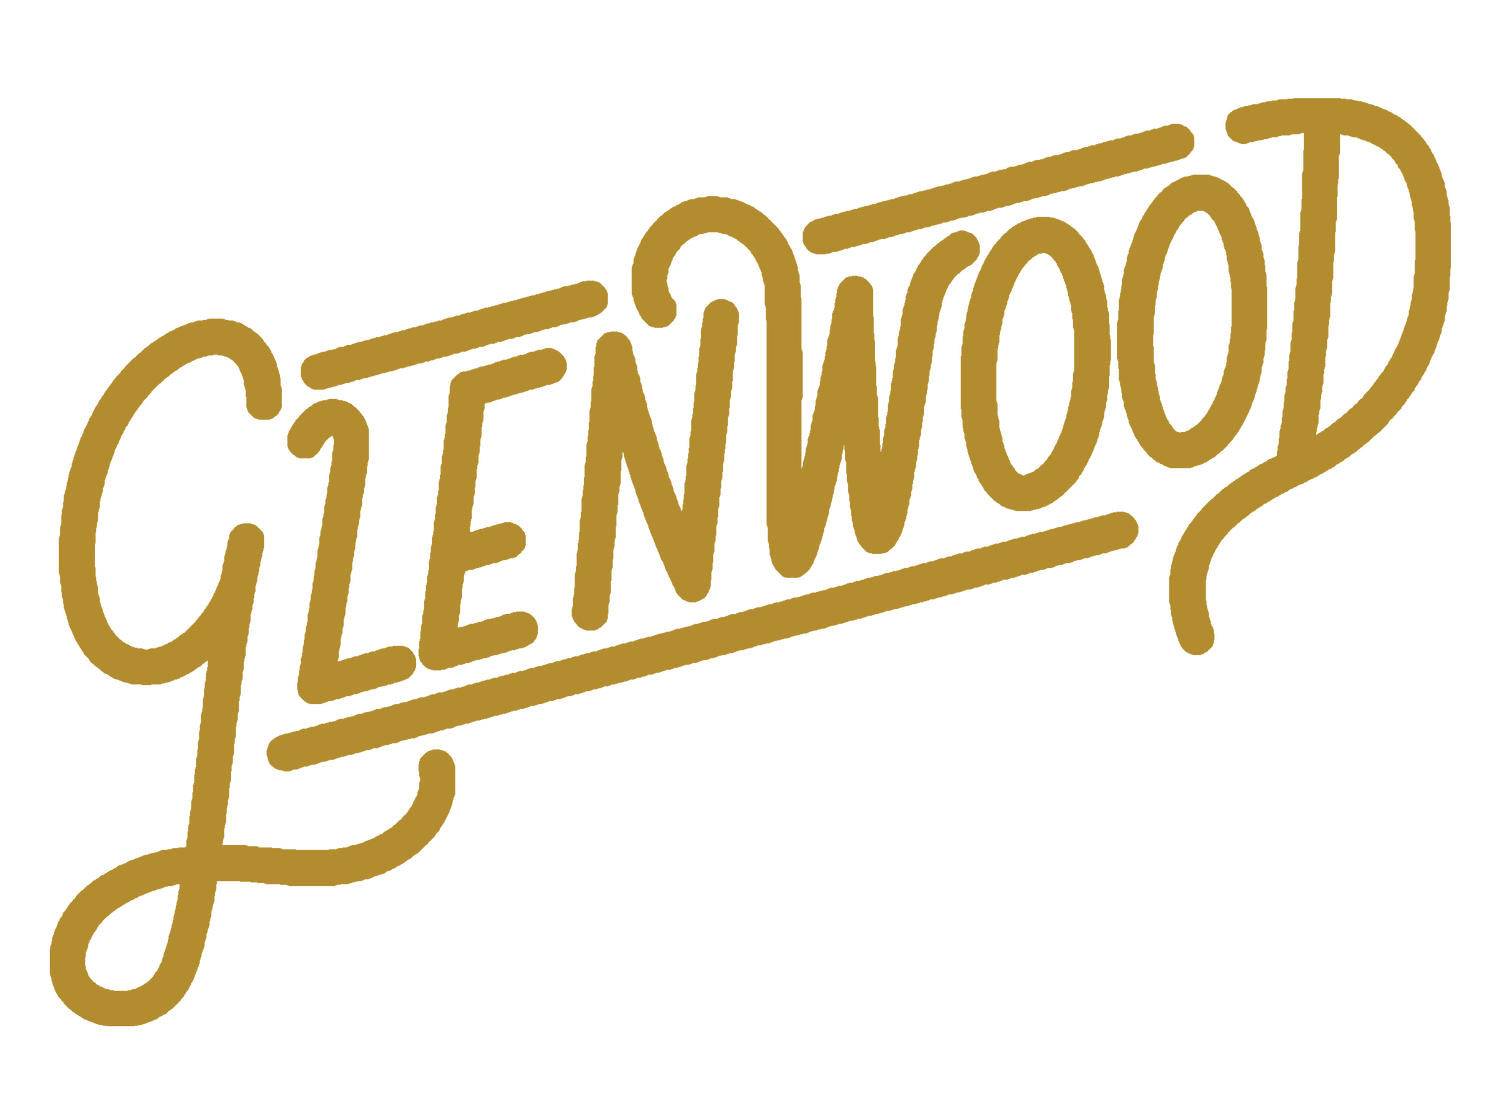 Glenwood Creative